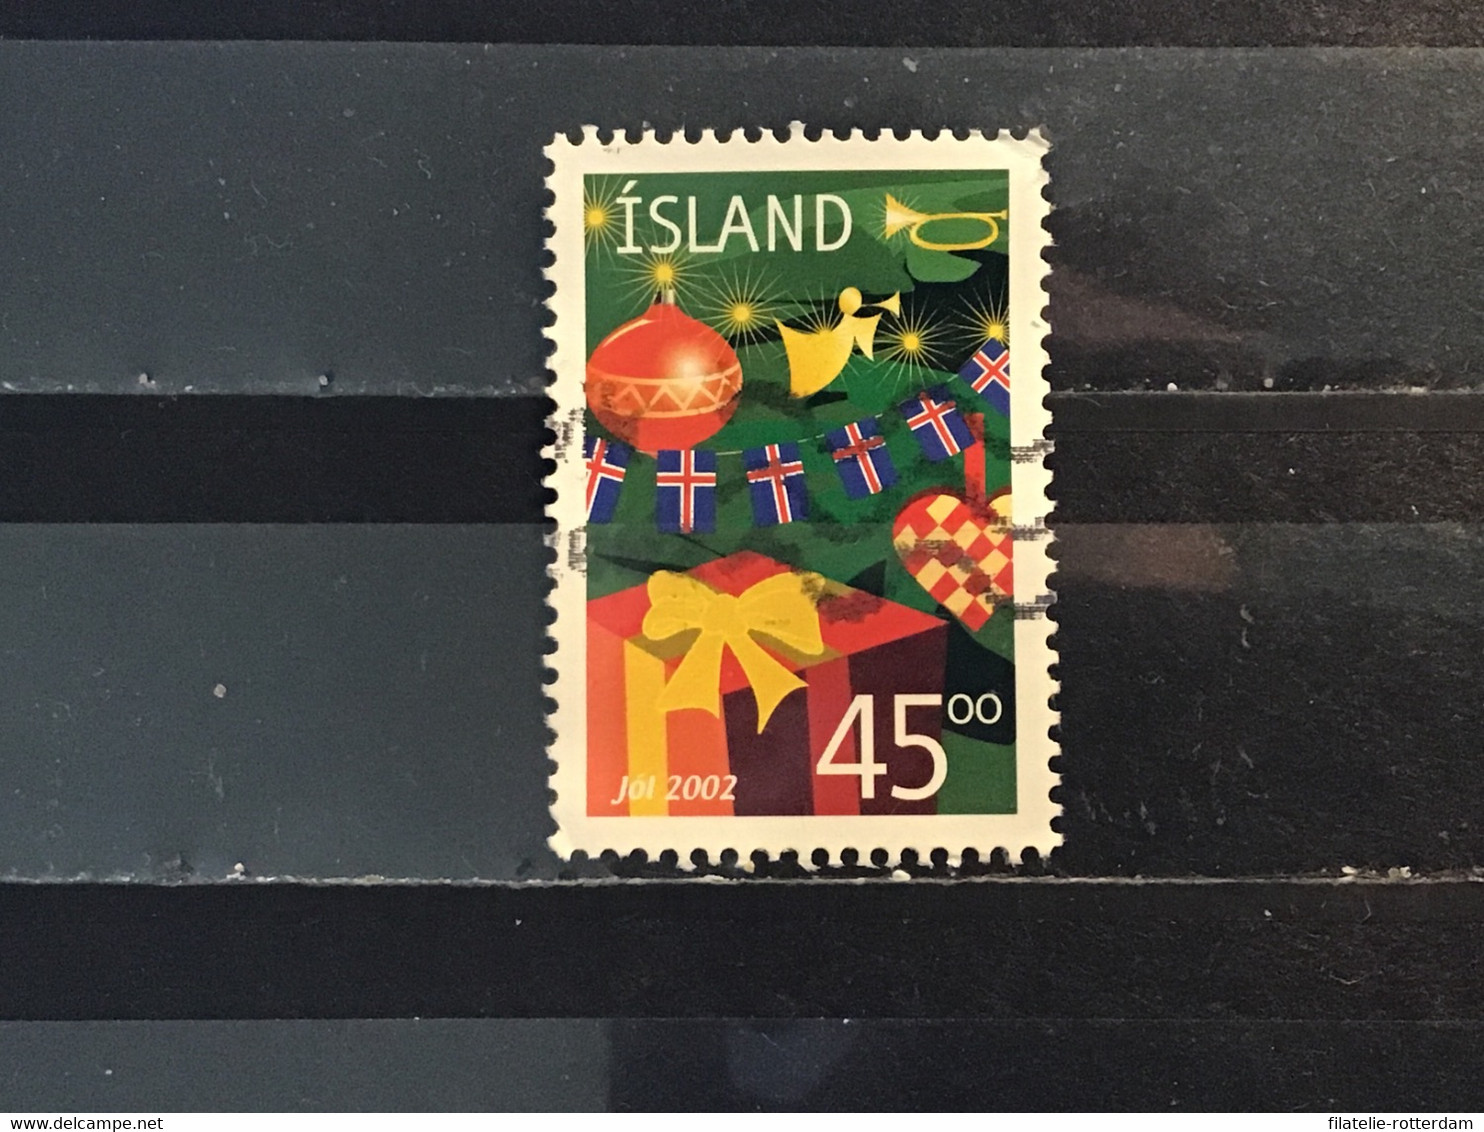 IJsland / Iceland - Kerstmis (45) 2002 - Gebraucht